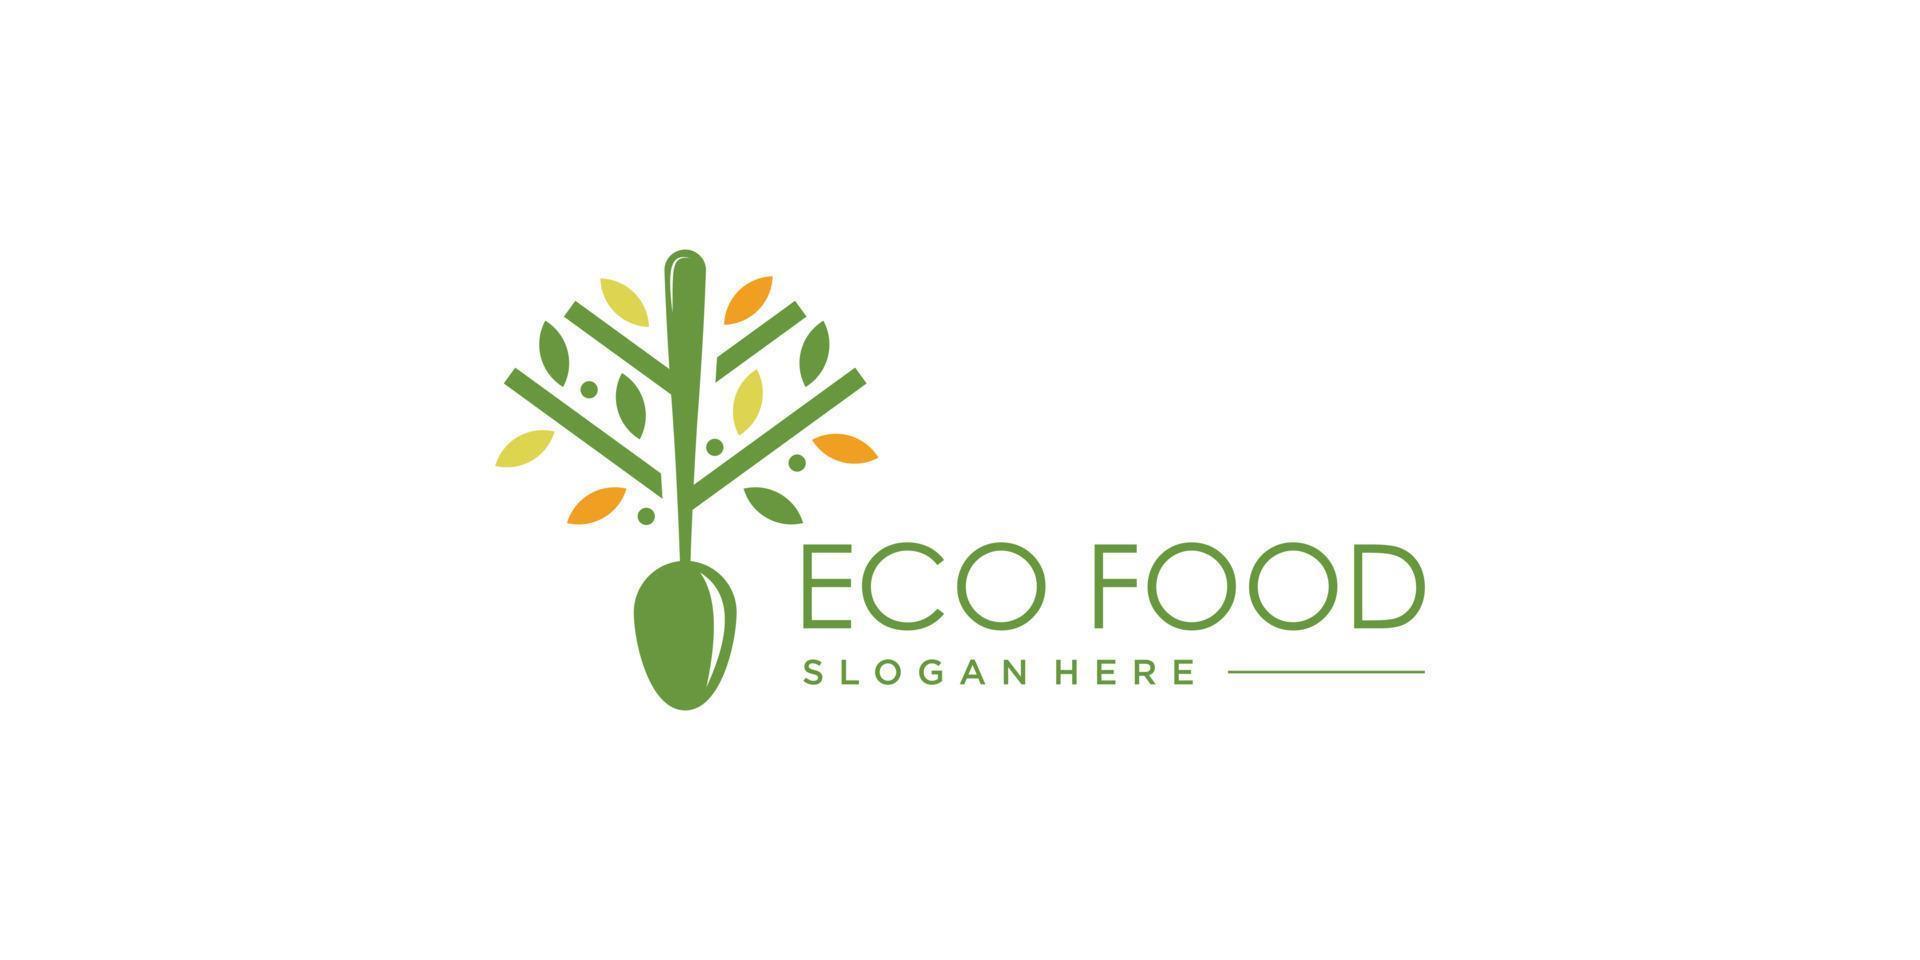 Ecofood icon logo design with creative element organic style Premium Vector